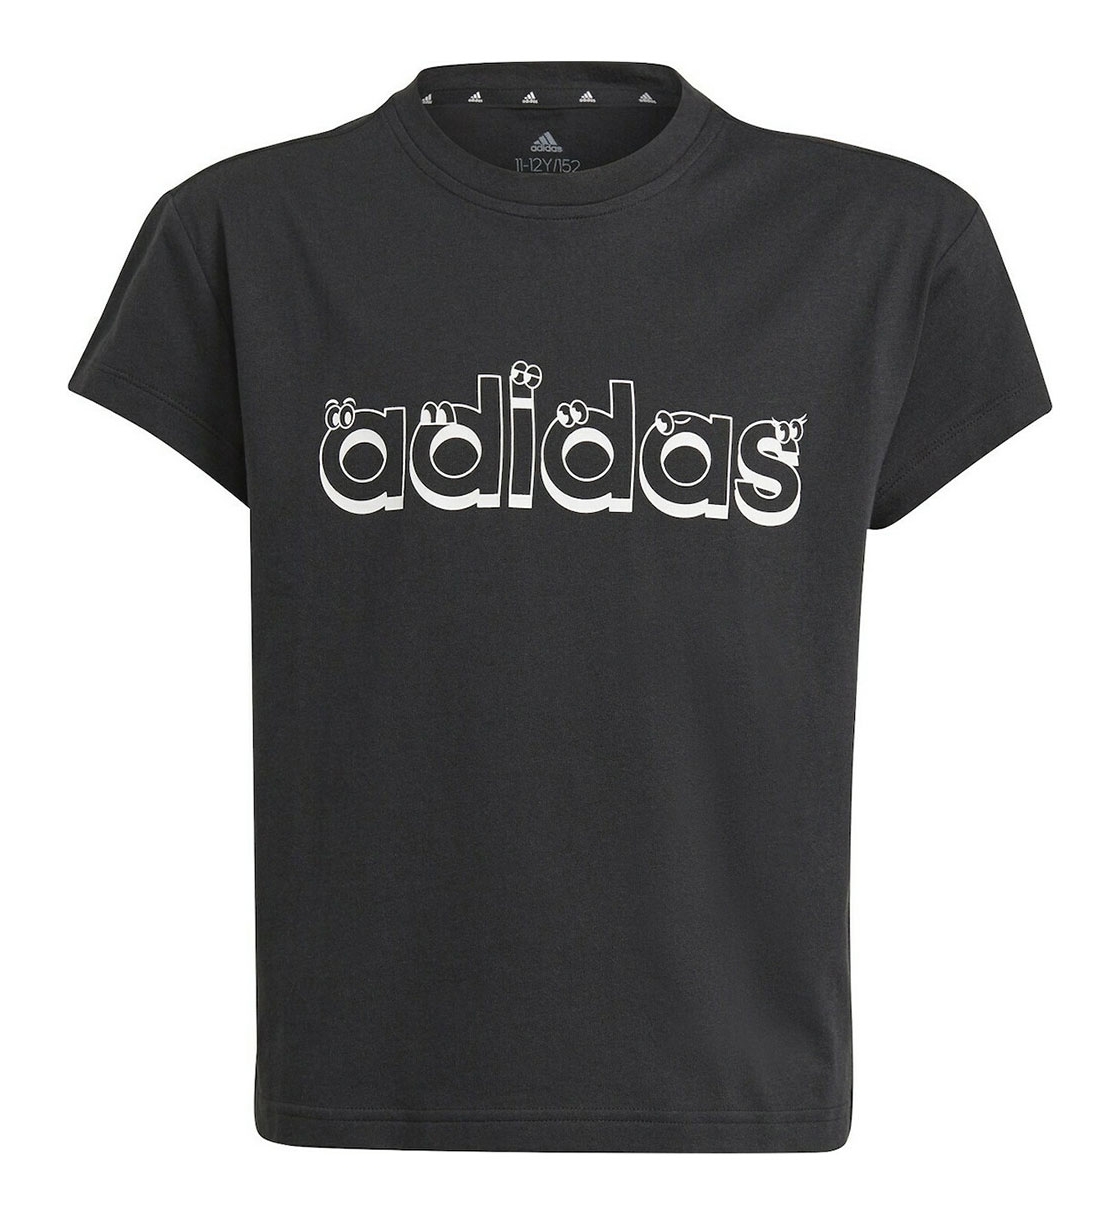 Adidas Ss21 Adidas Girls Graphic T-Shirt 2